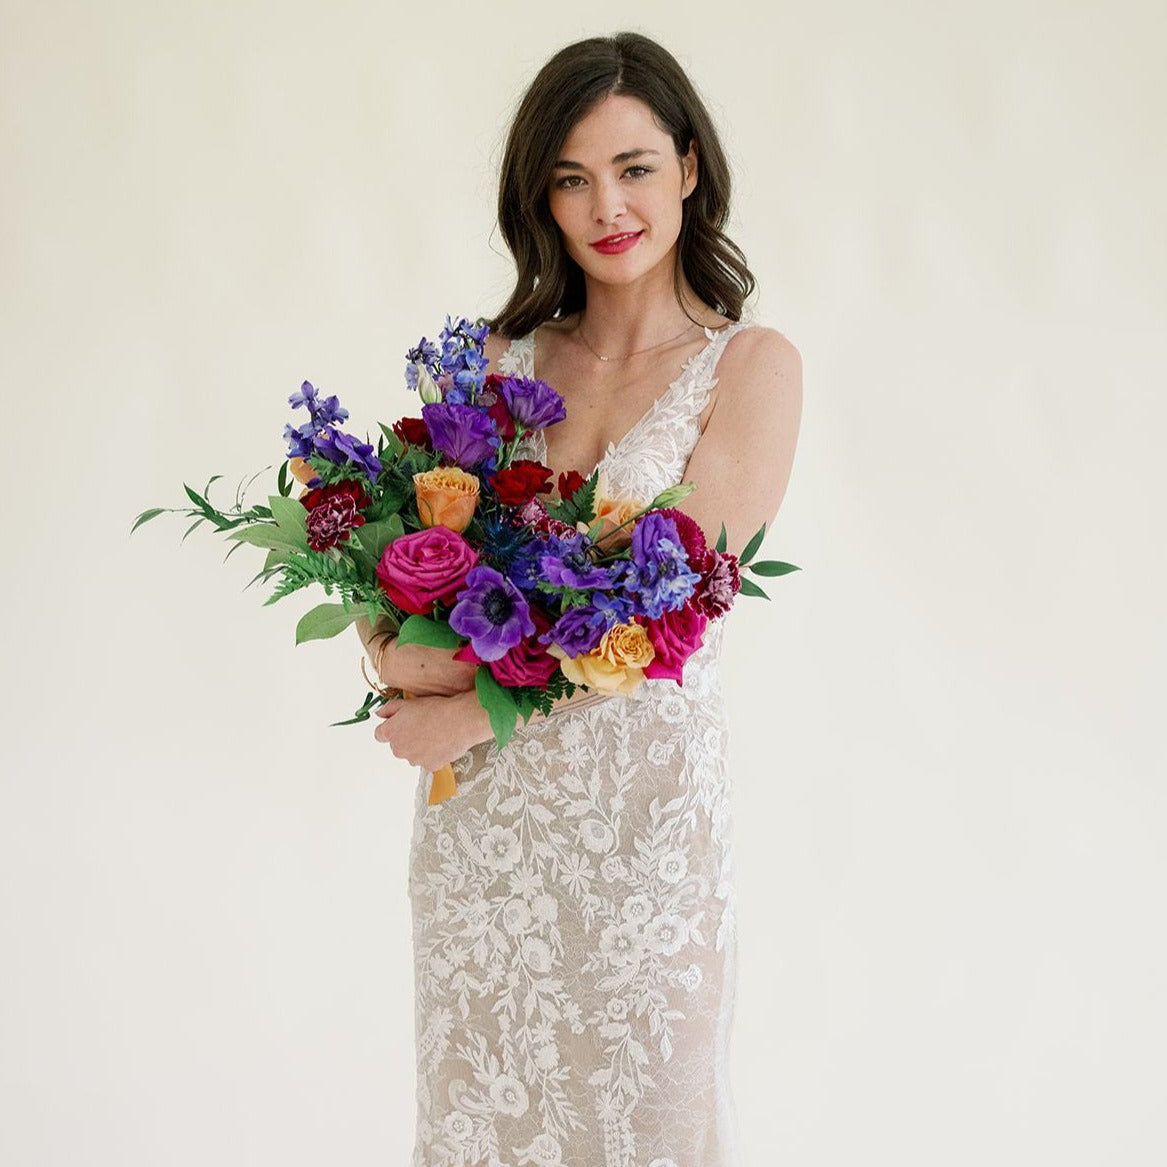 Jewel Tone Wedding Bouquet for DIY Brides